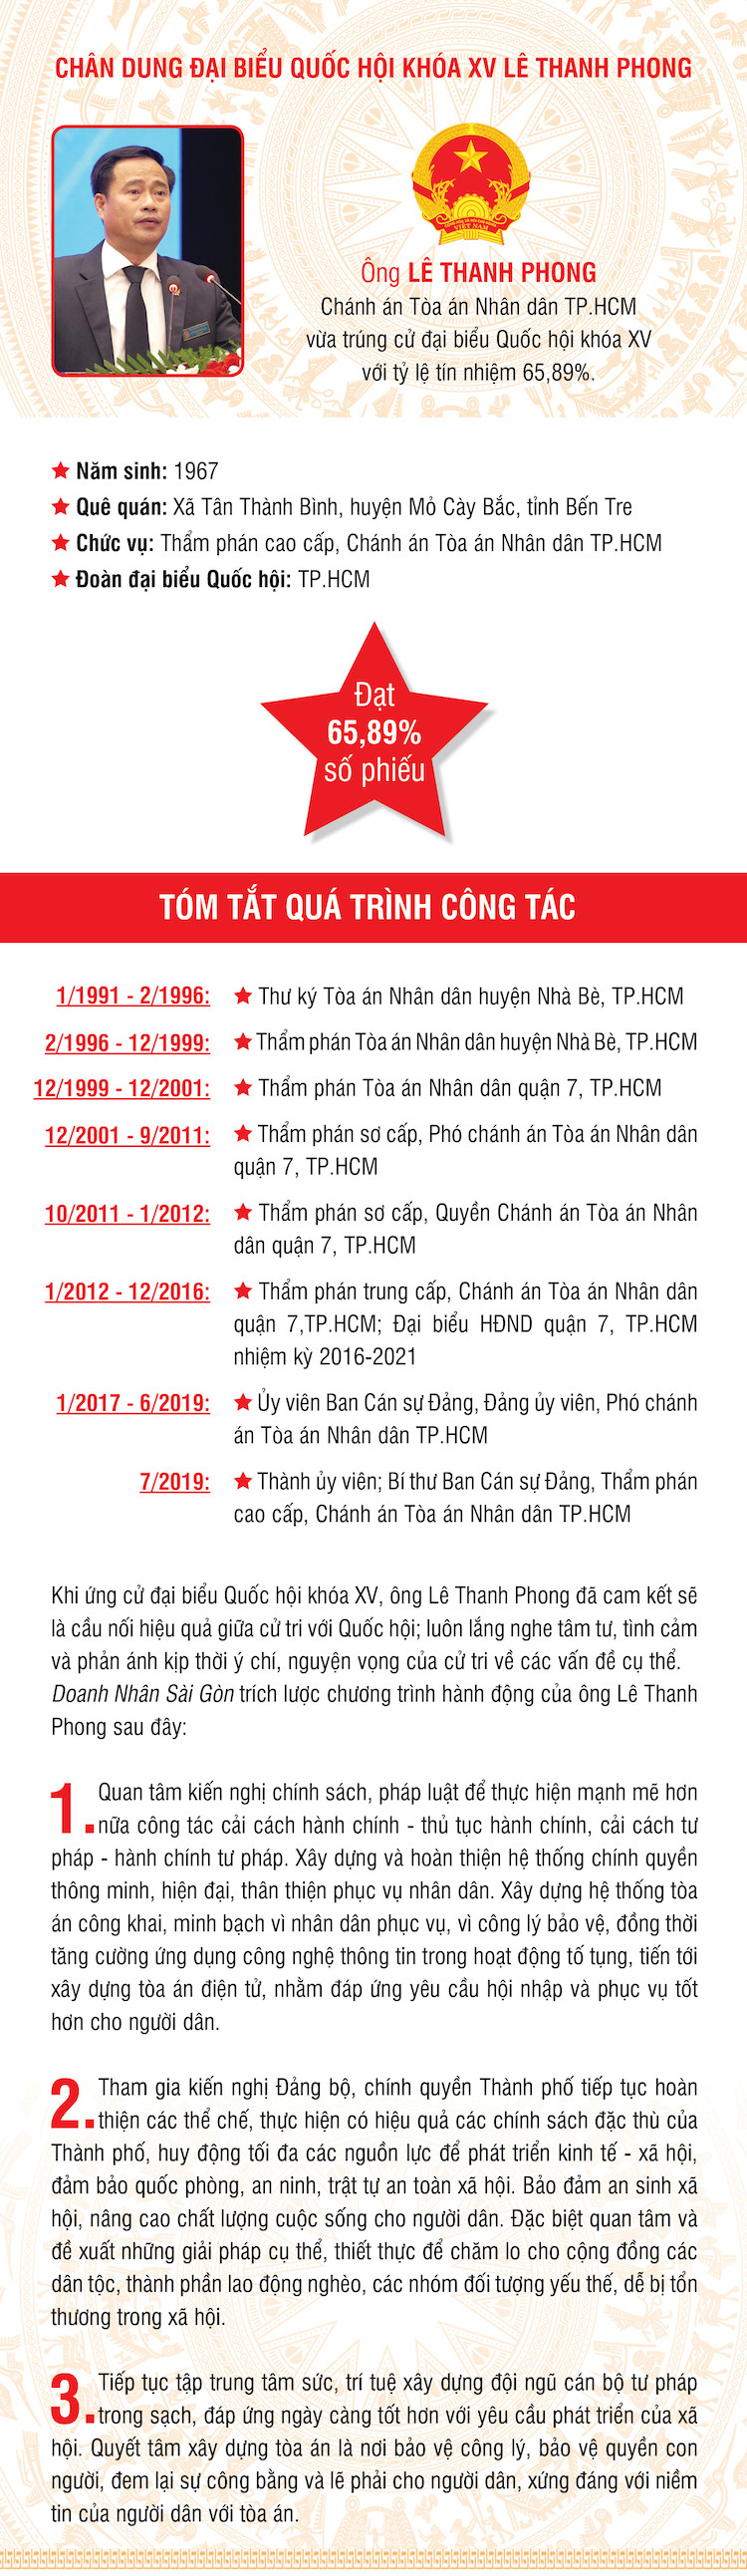 Le-Thanh-Phong-1-3847-1624011111.jpg